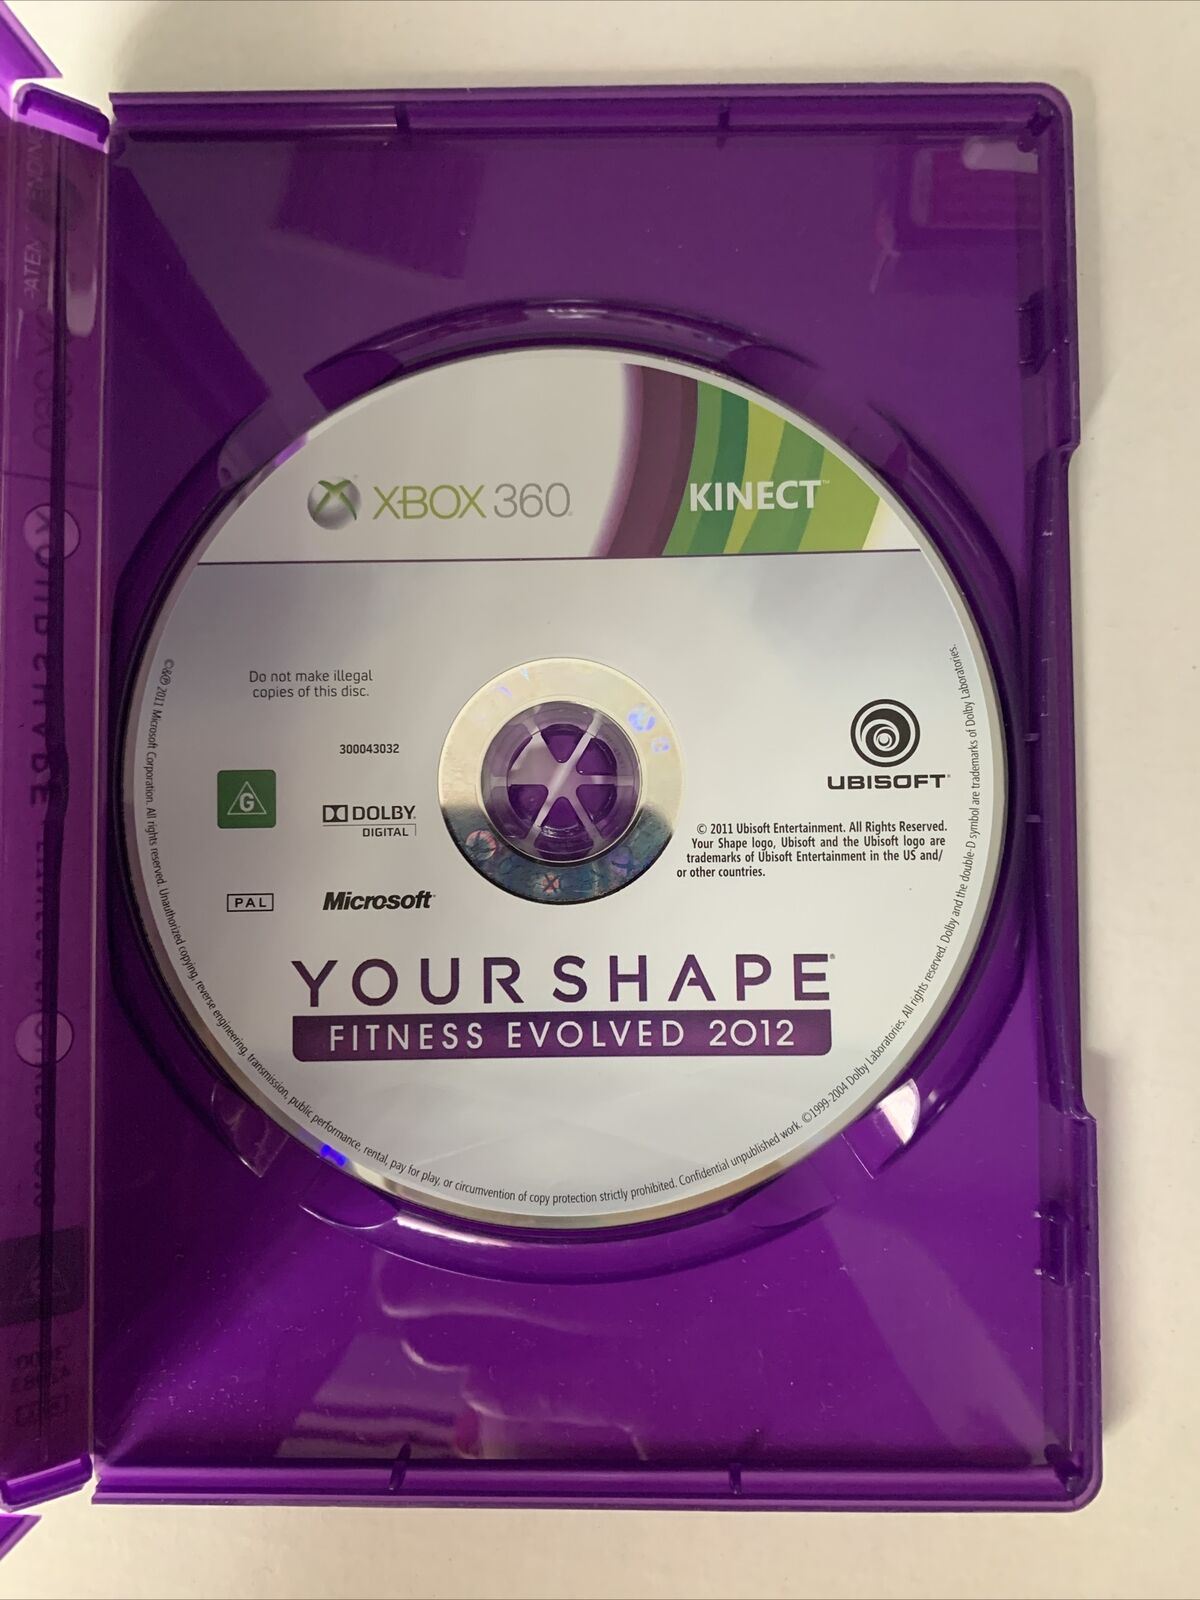 Your Shape Fitness Evolved 2012 - Xbox 360 KINECT SENSOR Needed - PAL